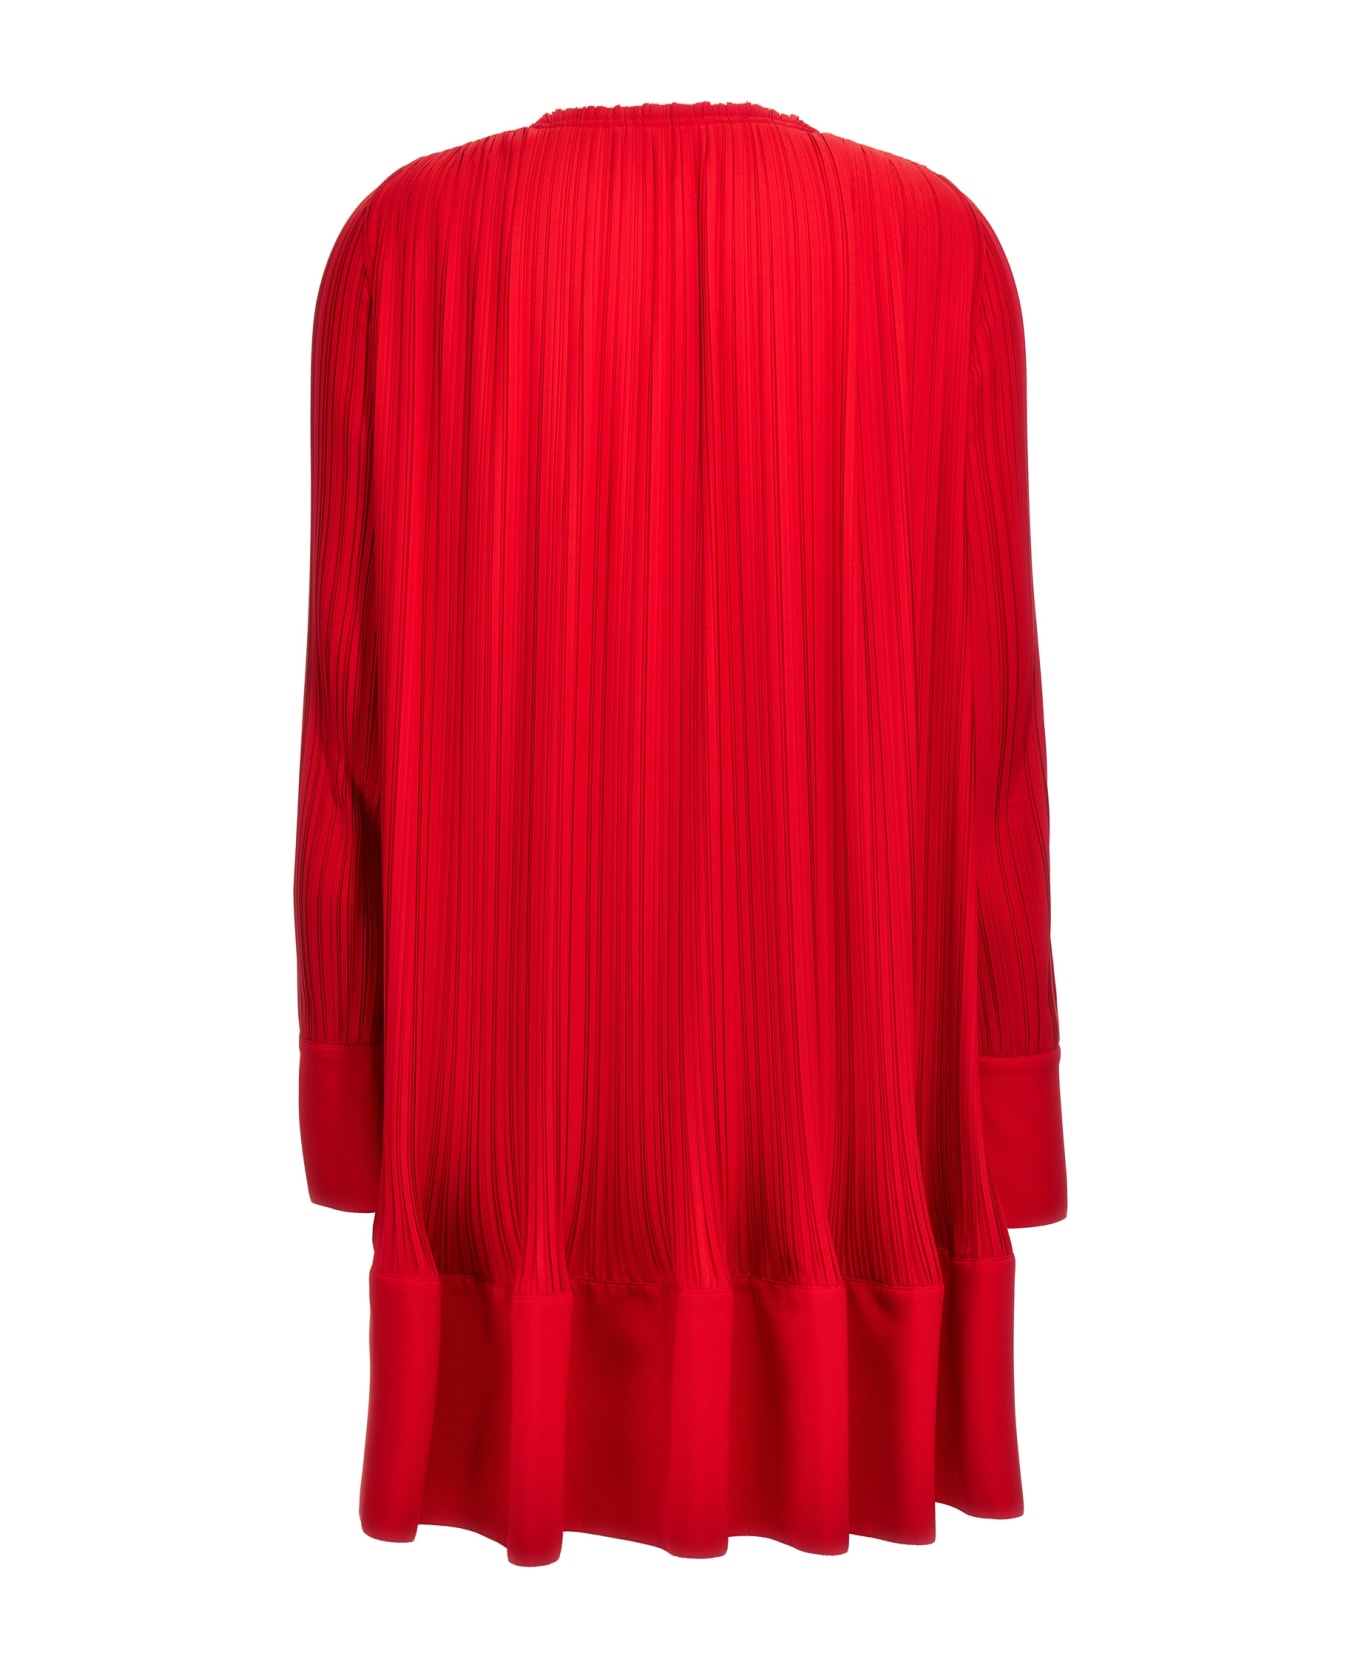 Lanvin 'flared lighters' Dress - Red